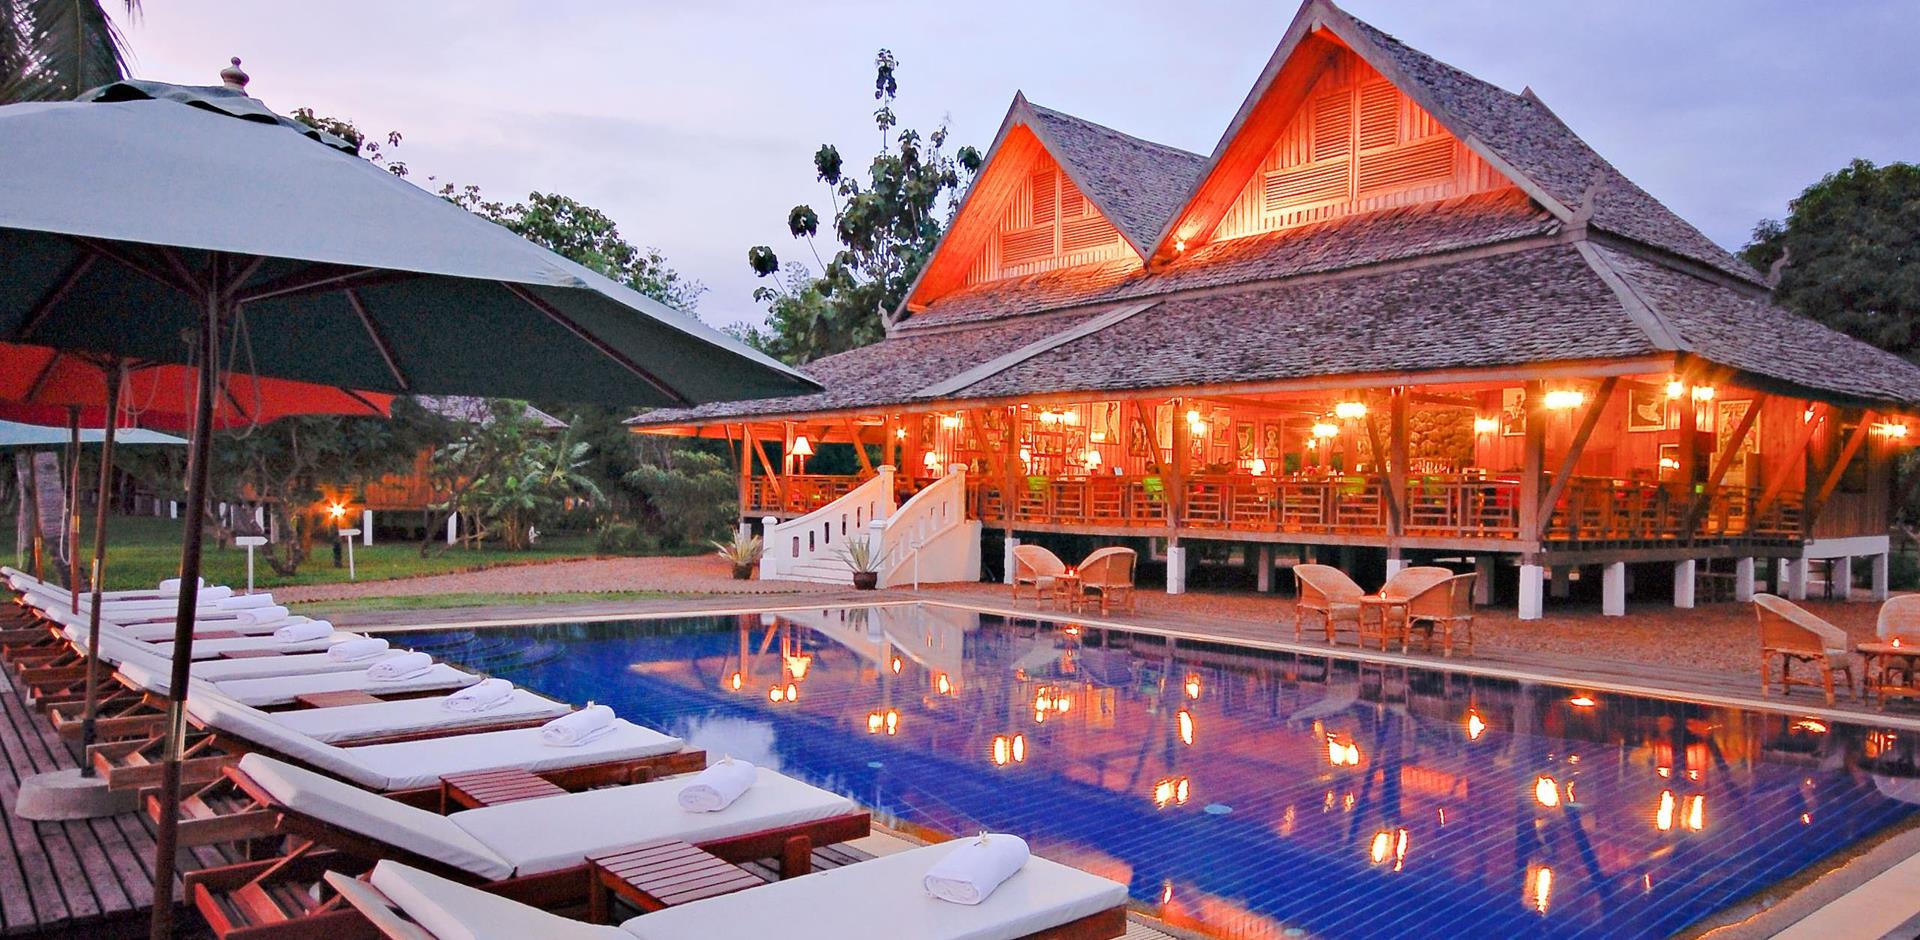 Pool and exterior, La Folie Lodge, Laos